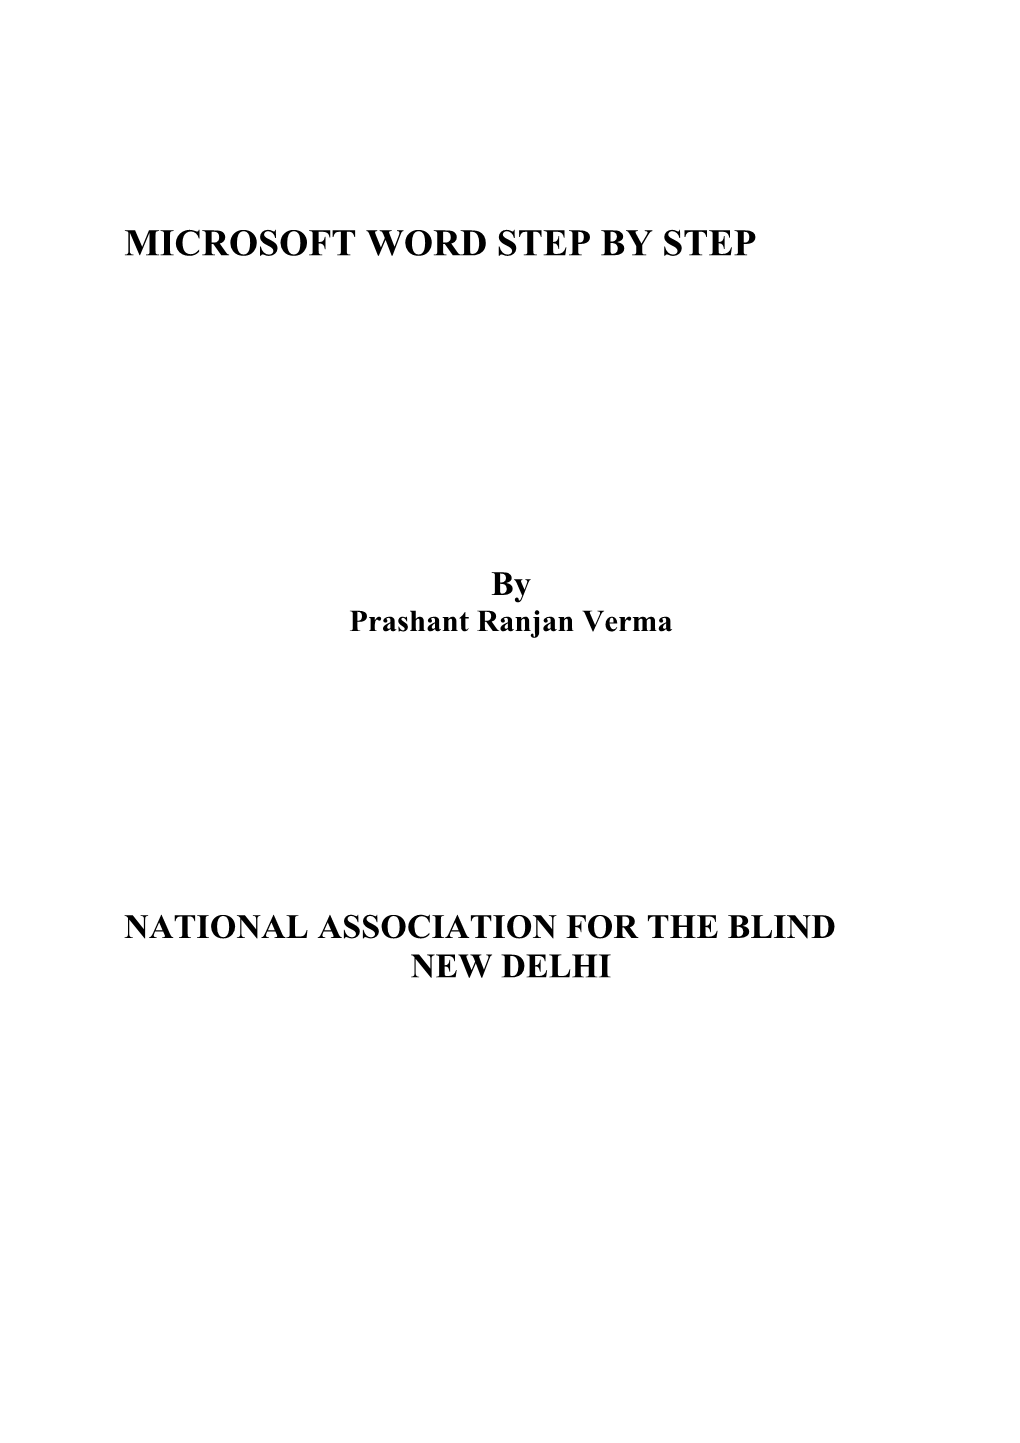 Microsoft Word Step by Step